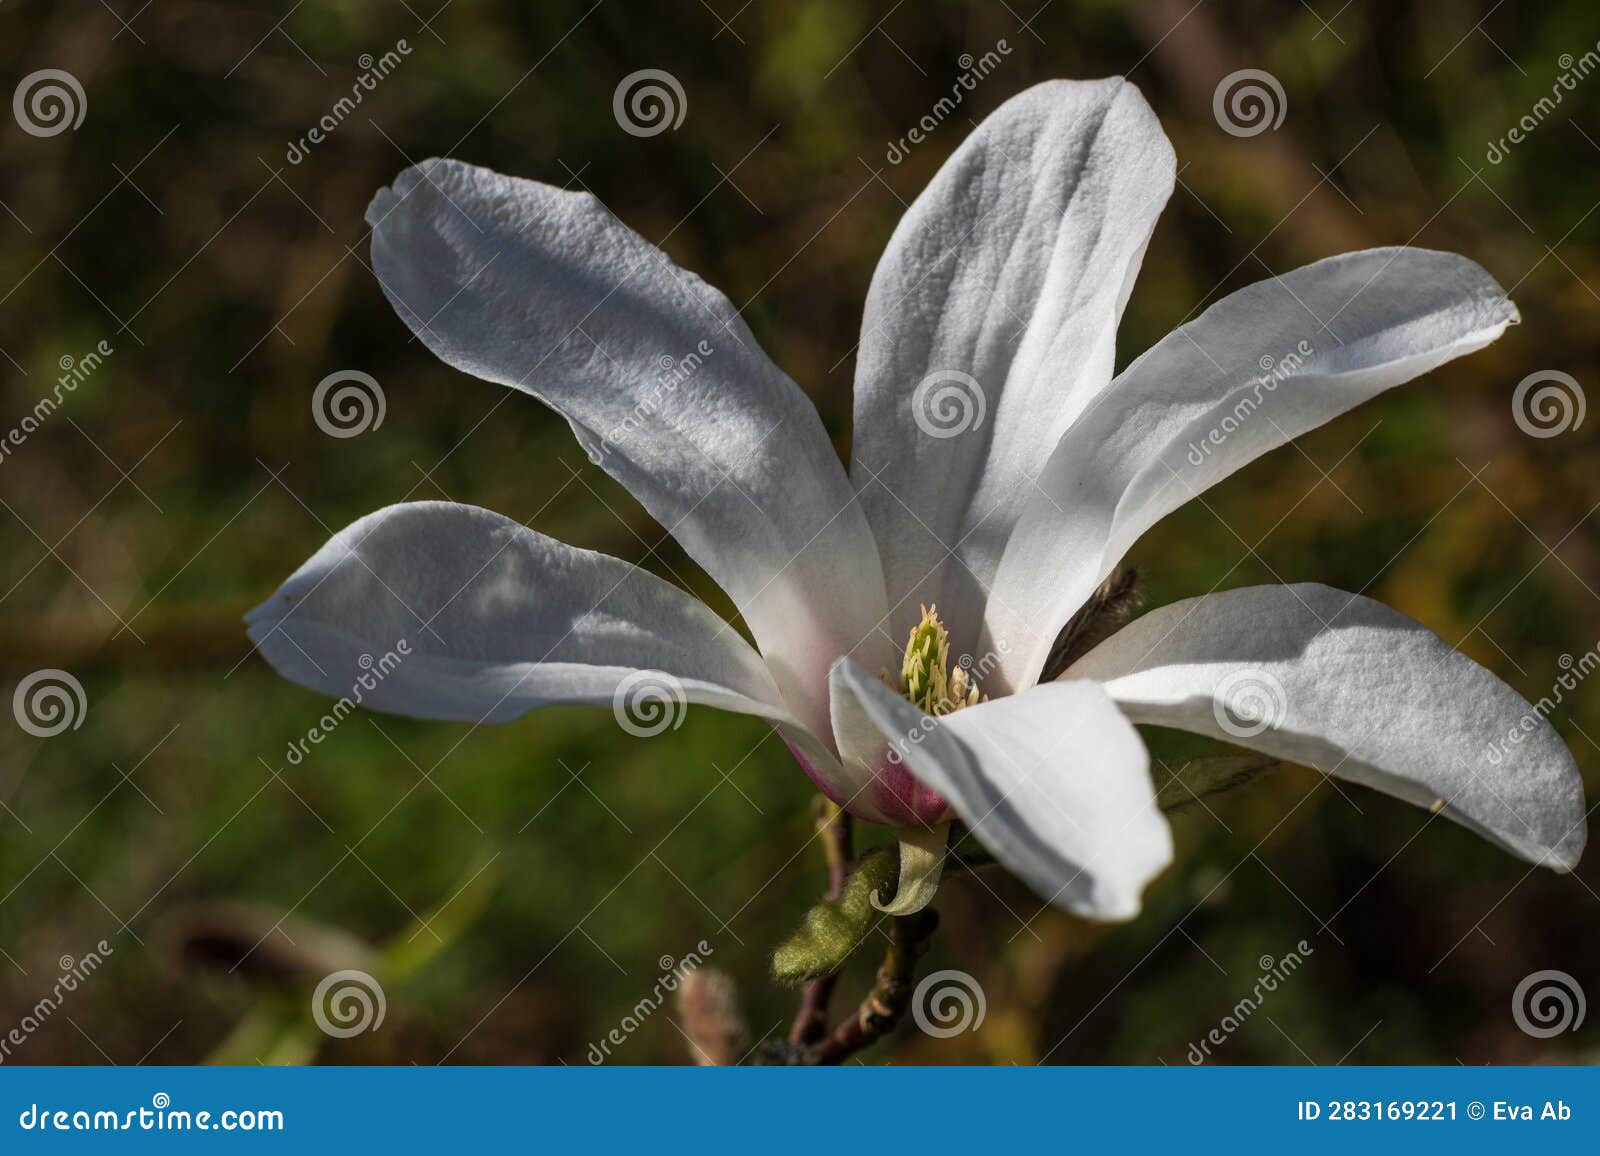 white magnolia flower in penumbra and green mottled background